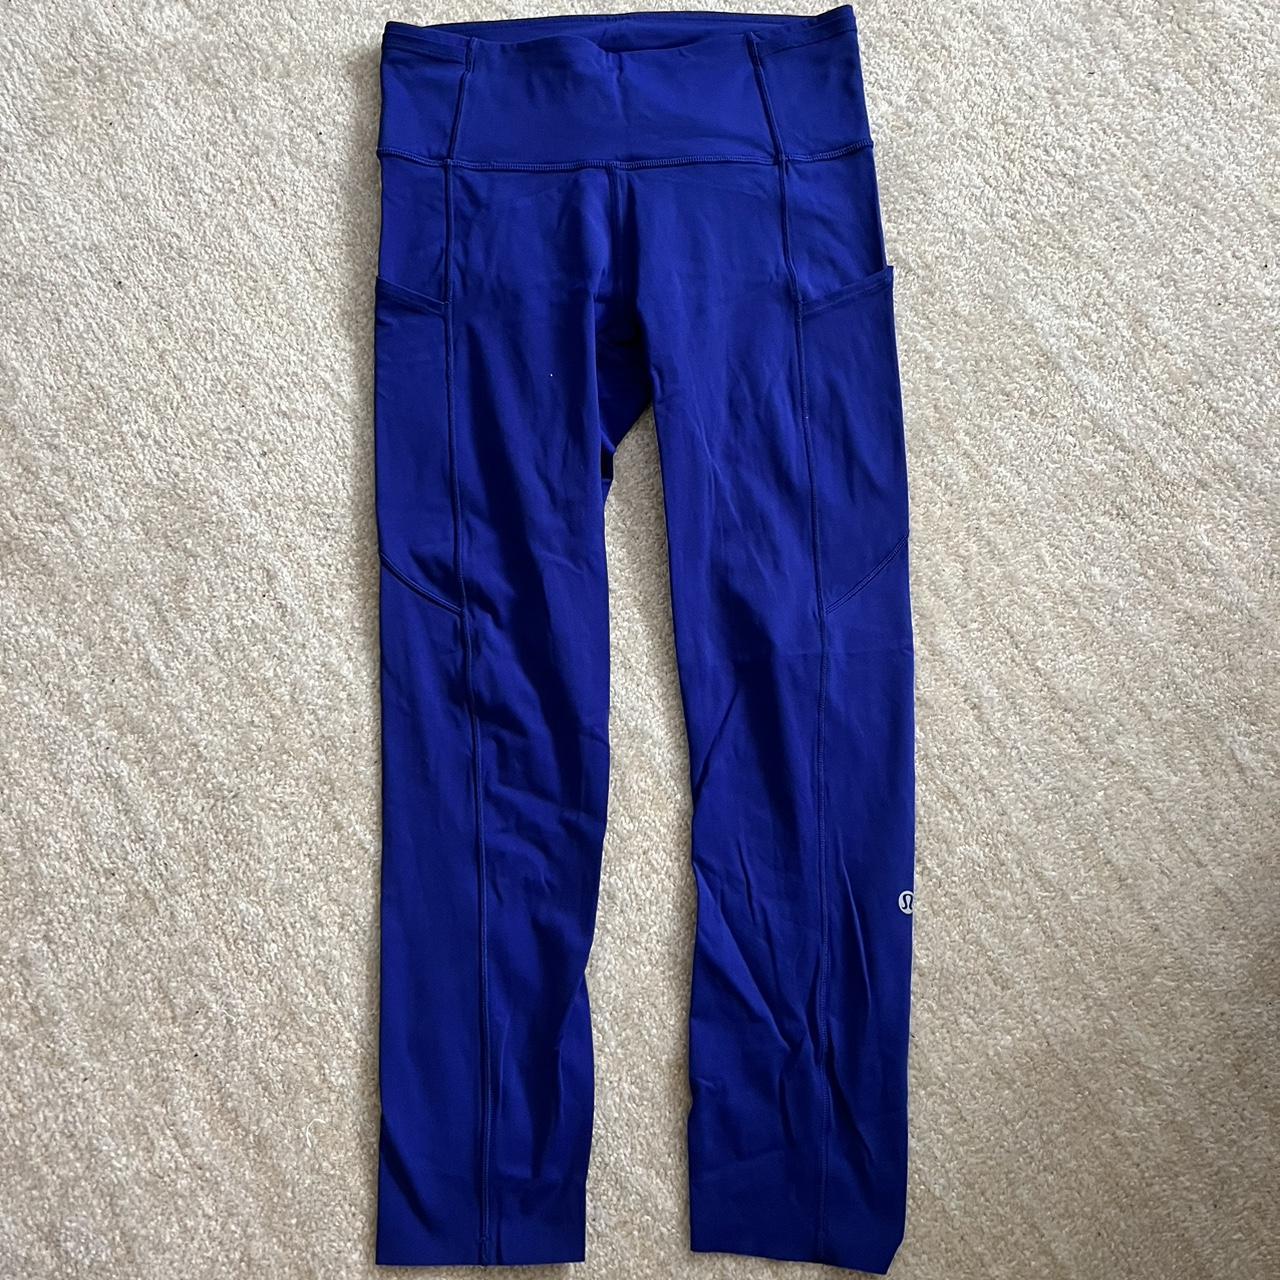 Lululemon sz 6 blue leggings Has phone pockets and... - Depop